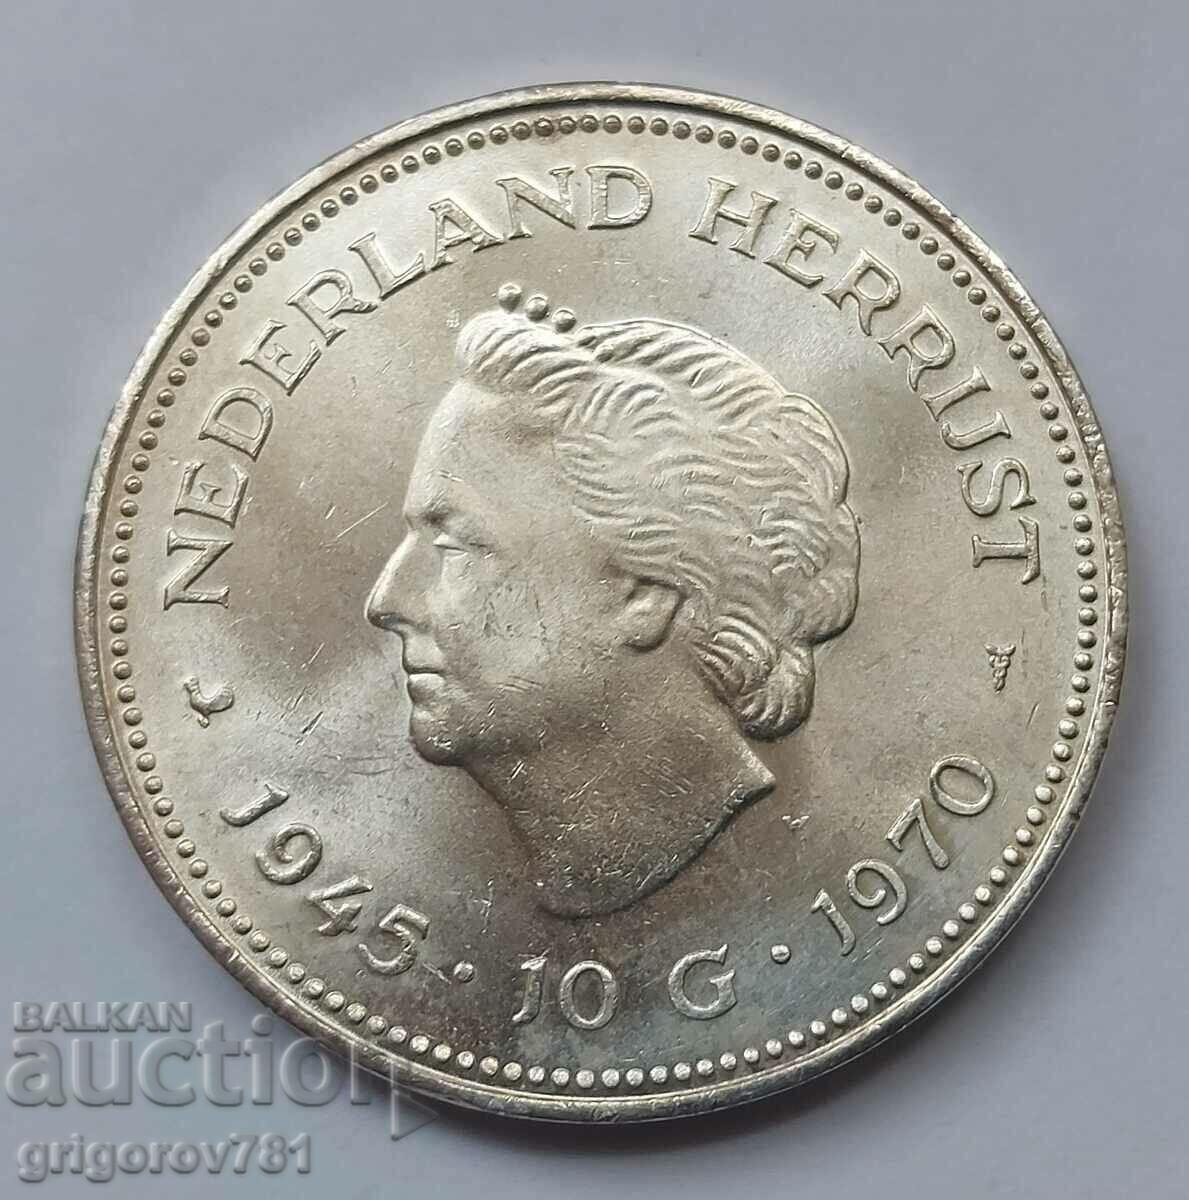 10 Guilder Silver Netherlands 1970 - Silver Coin #2